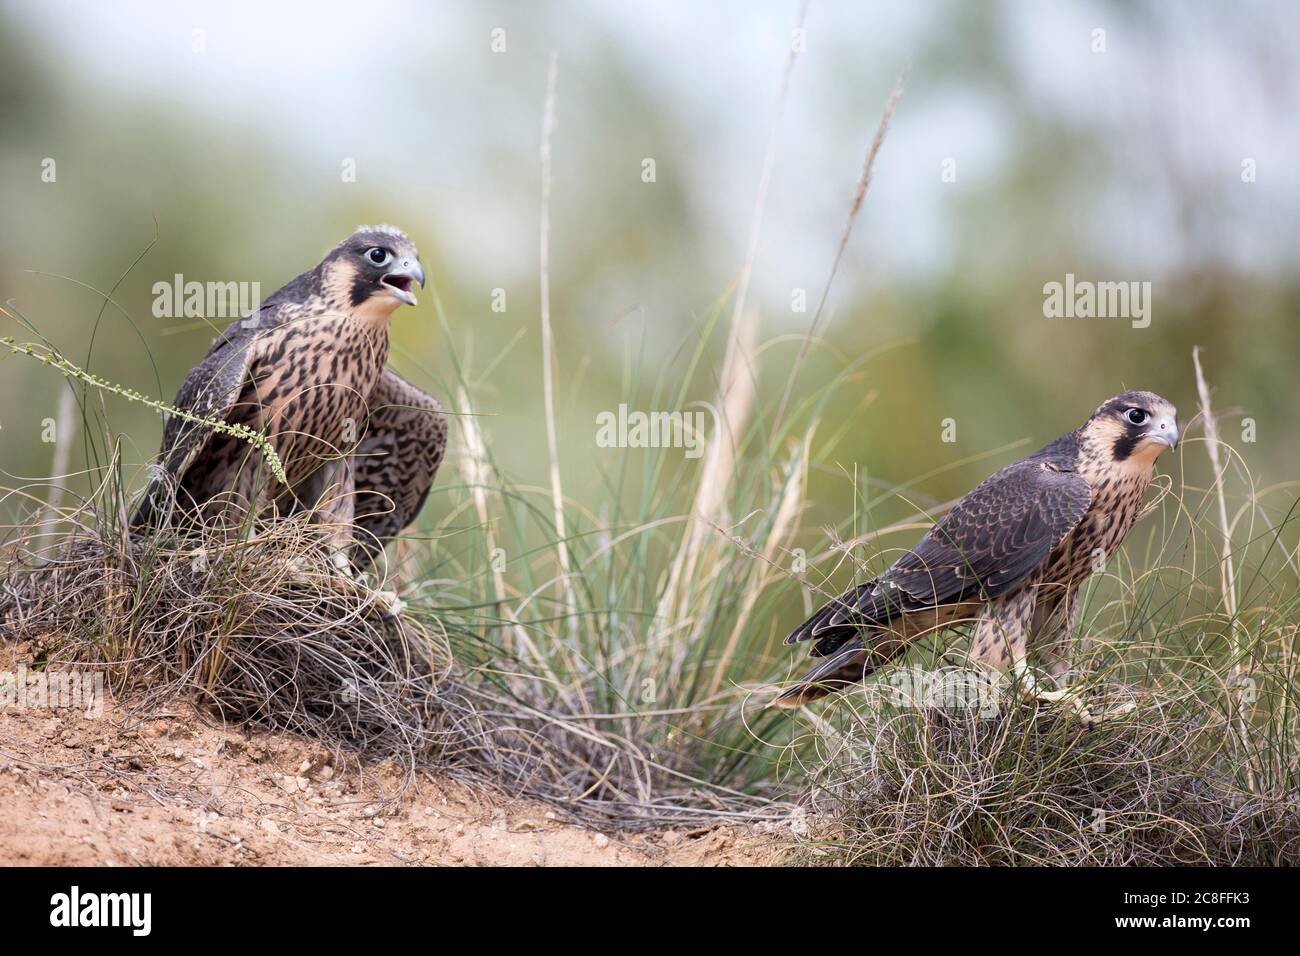 Mediterranean peregrine falcon (Falco peregrinus brookei, Falco brookei), two juveniles perching together on the ground, Spain Stock Photo